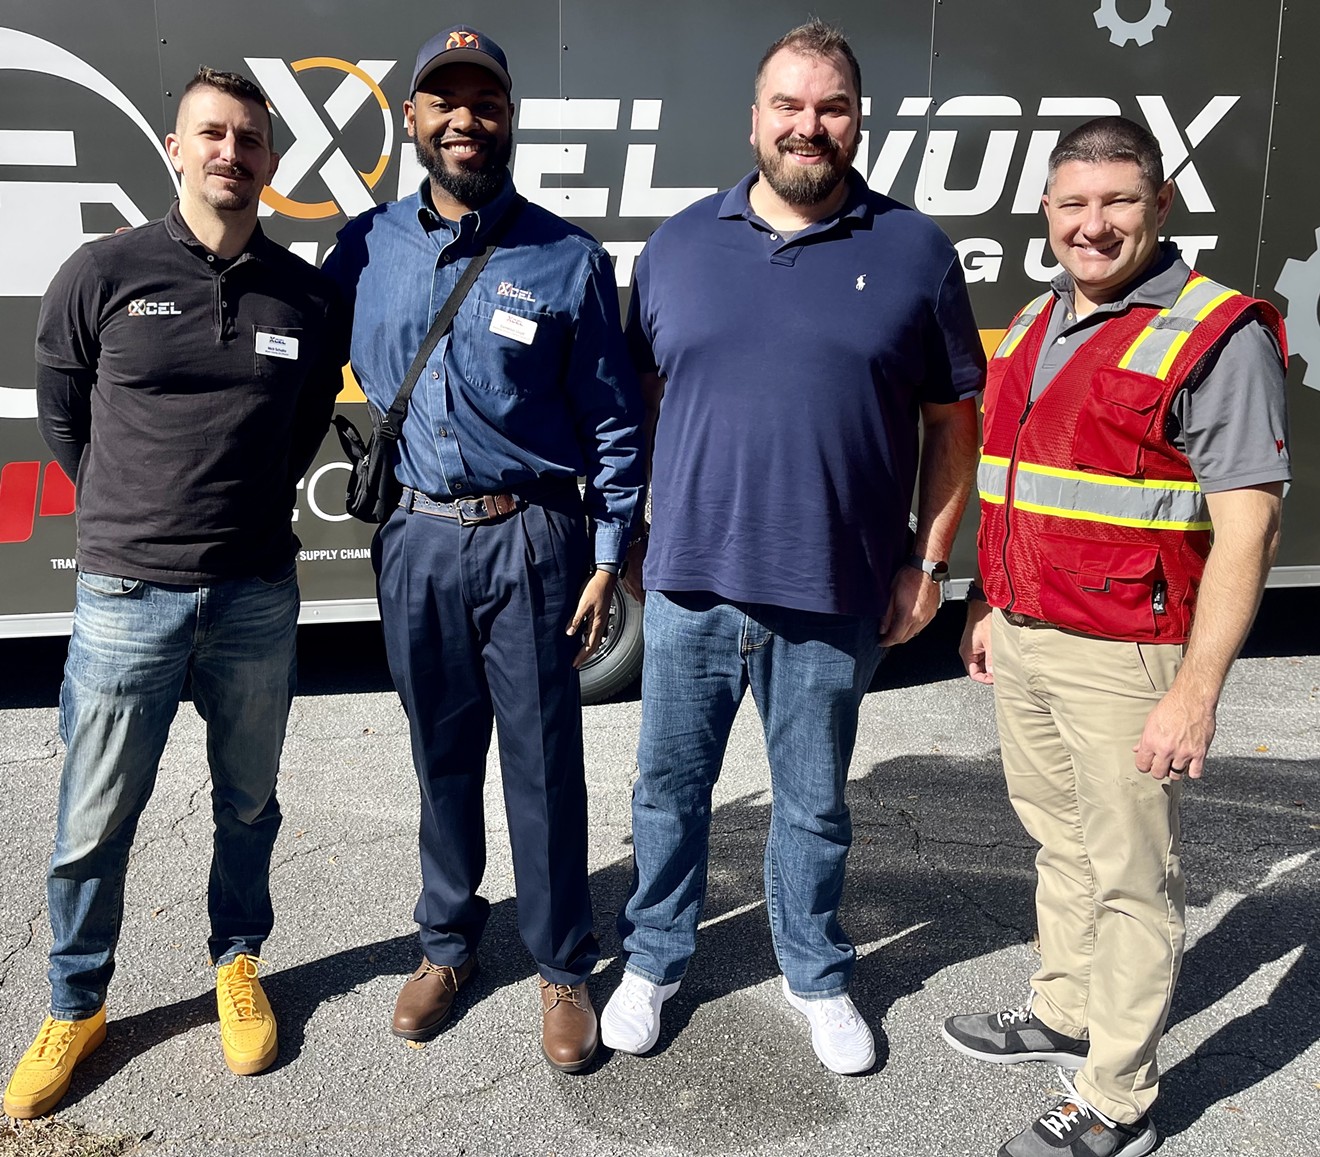 Xcel’s Logistics Mobile Training Unit Sponsored By Port City Logistics Ribbon Cutting